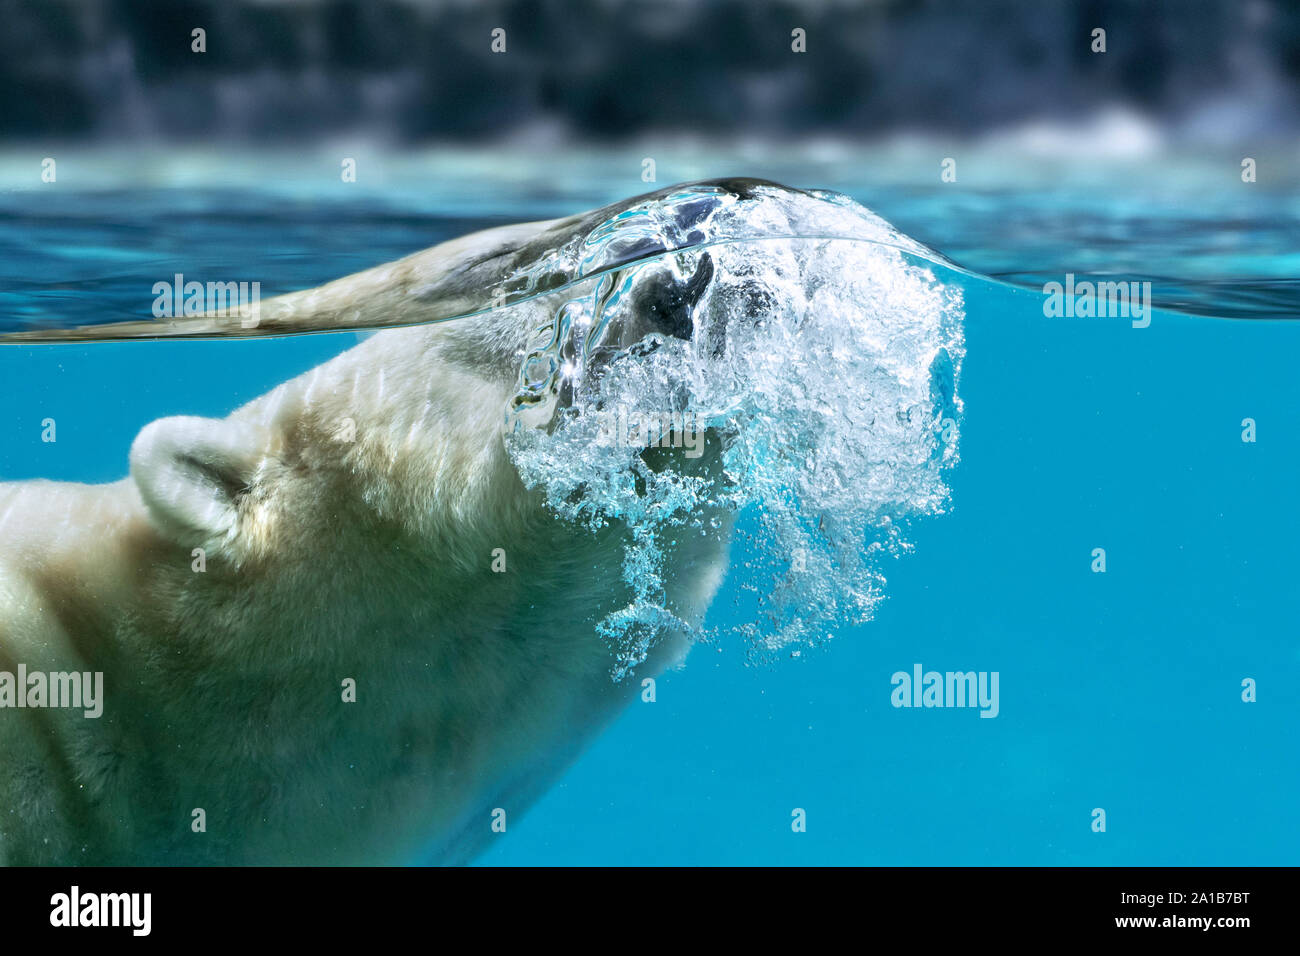 Polar bear (Ursus maritimus / Thalarctos maritimus) swimming underwater and breathing out / exhaling through nose showing air bubbles Stock Photo